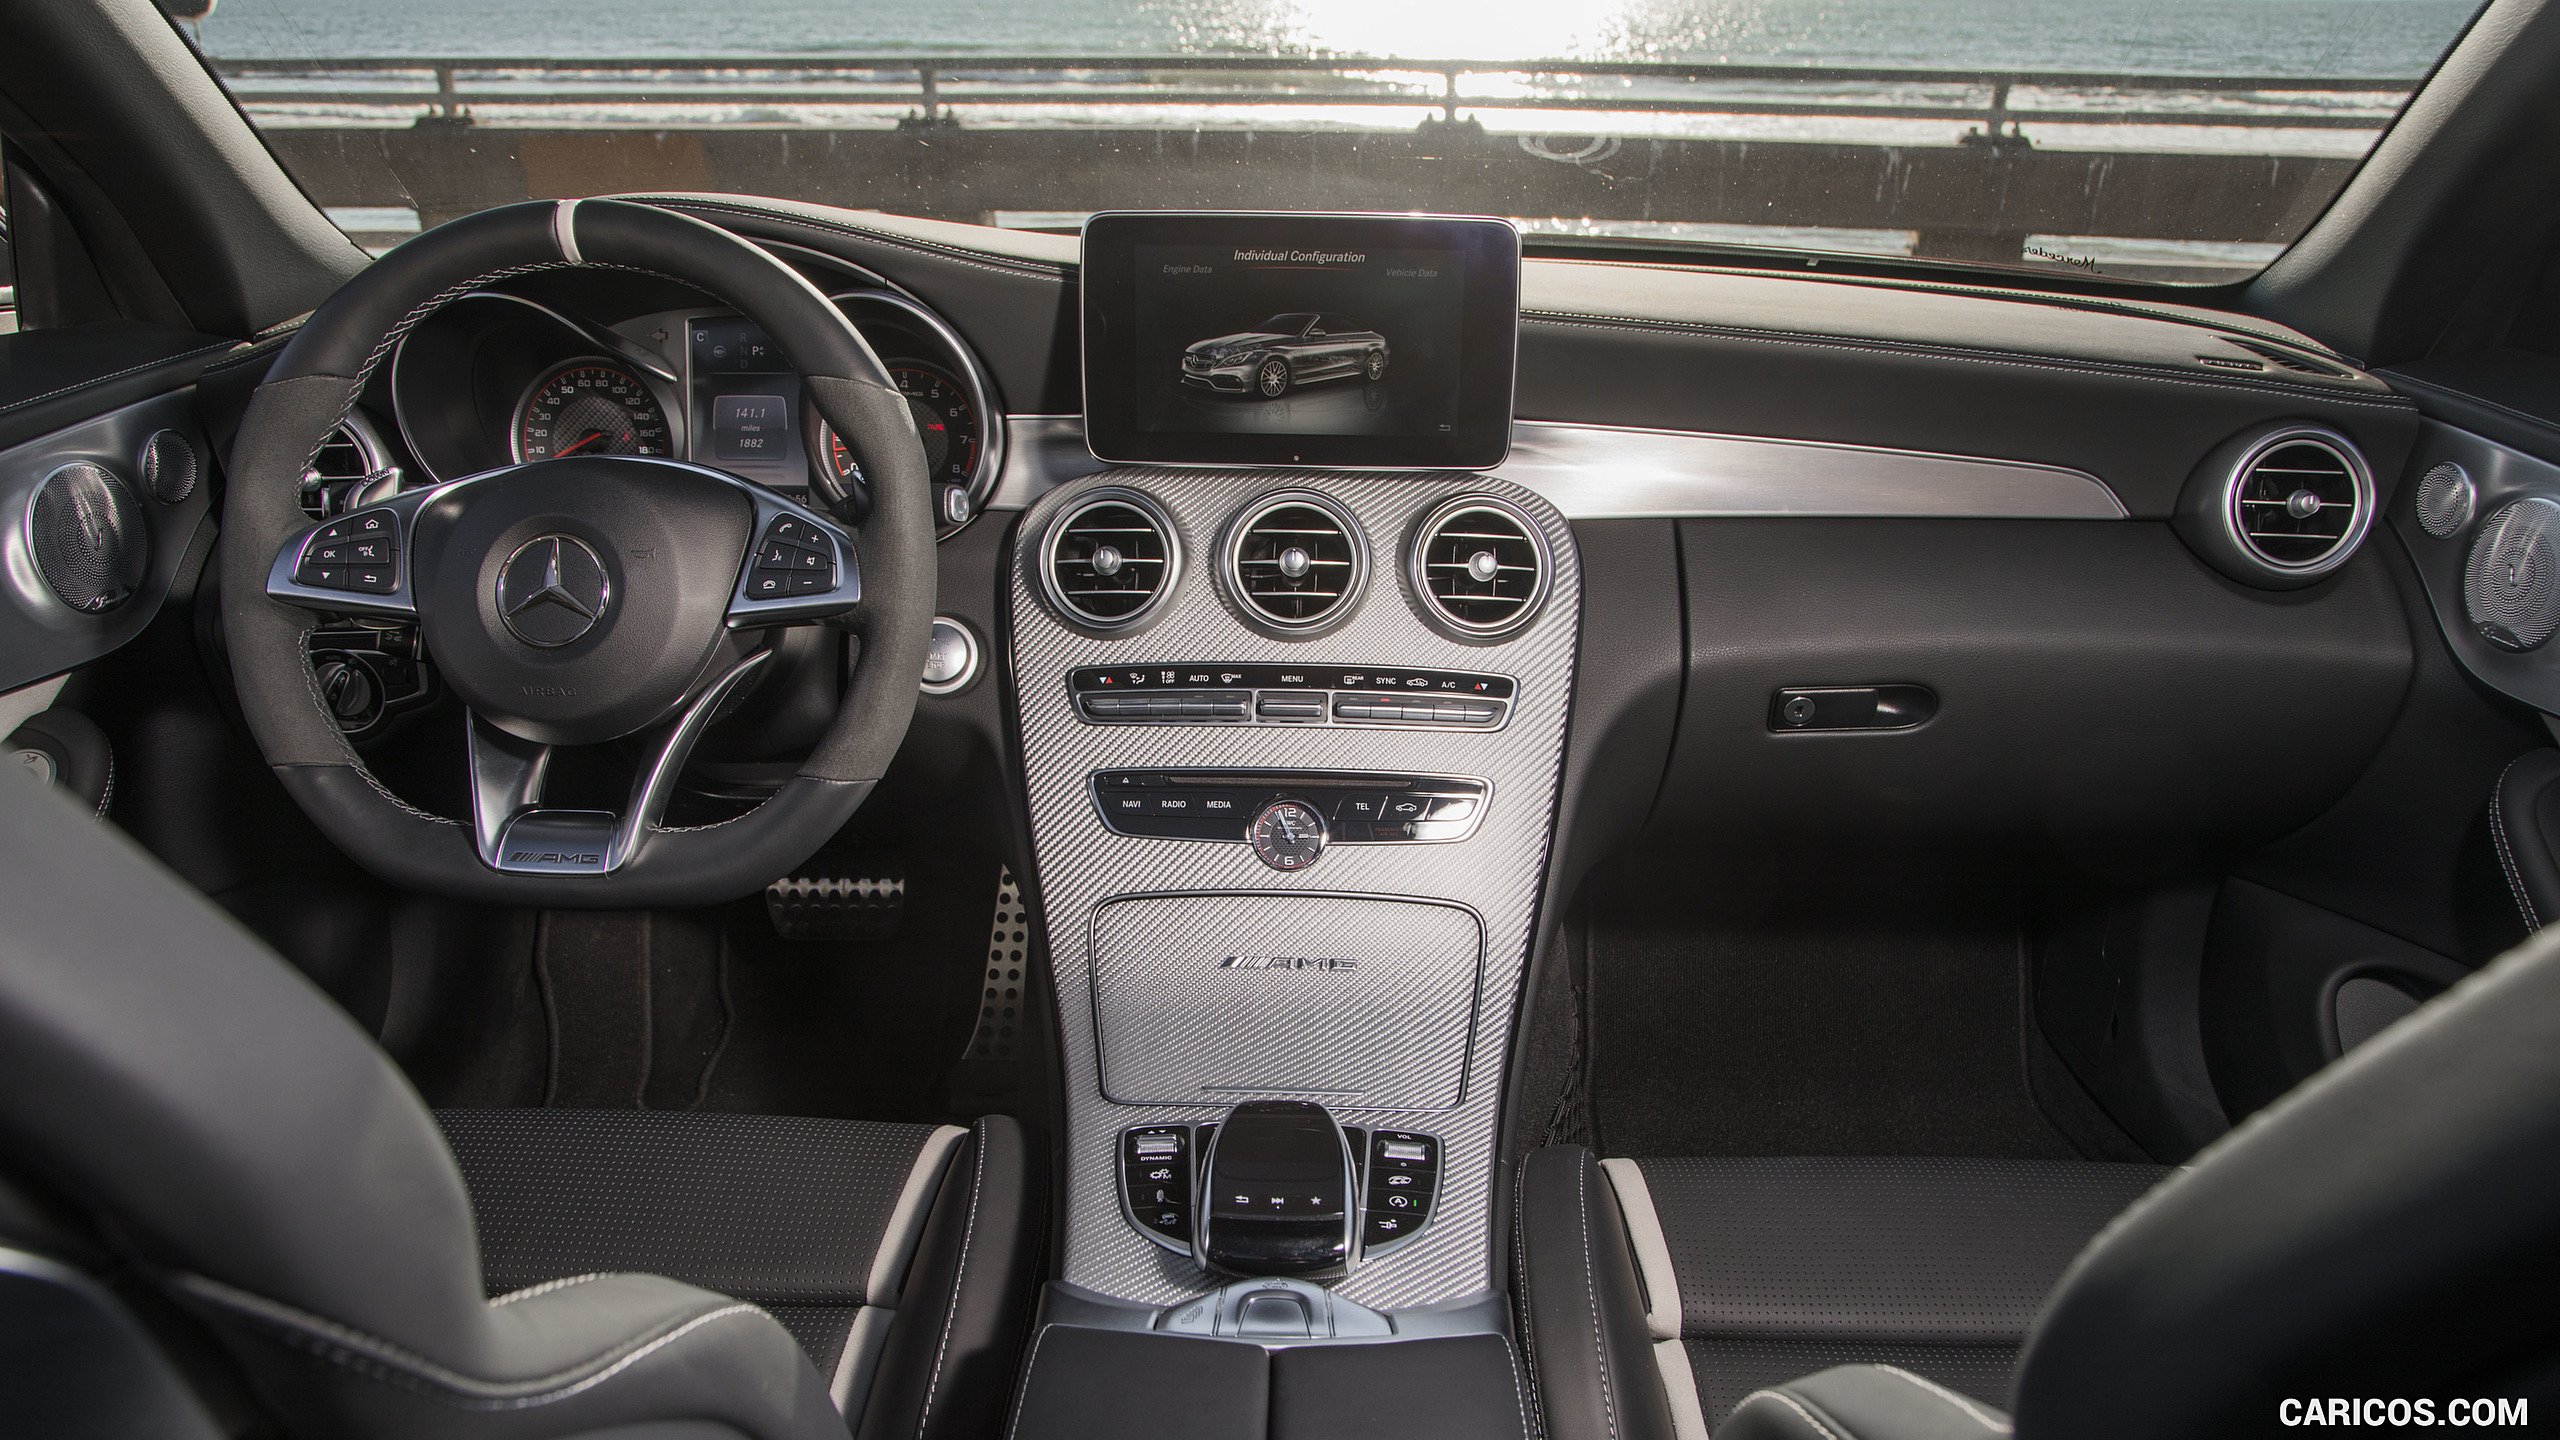 2017 Mercedes-AMG C63 S Cabriolet (US-Spec) - Interior, Cockpit, #213 of 222